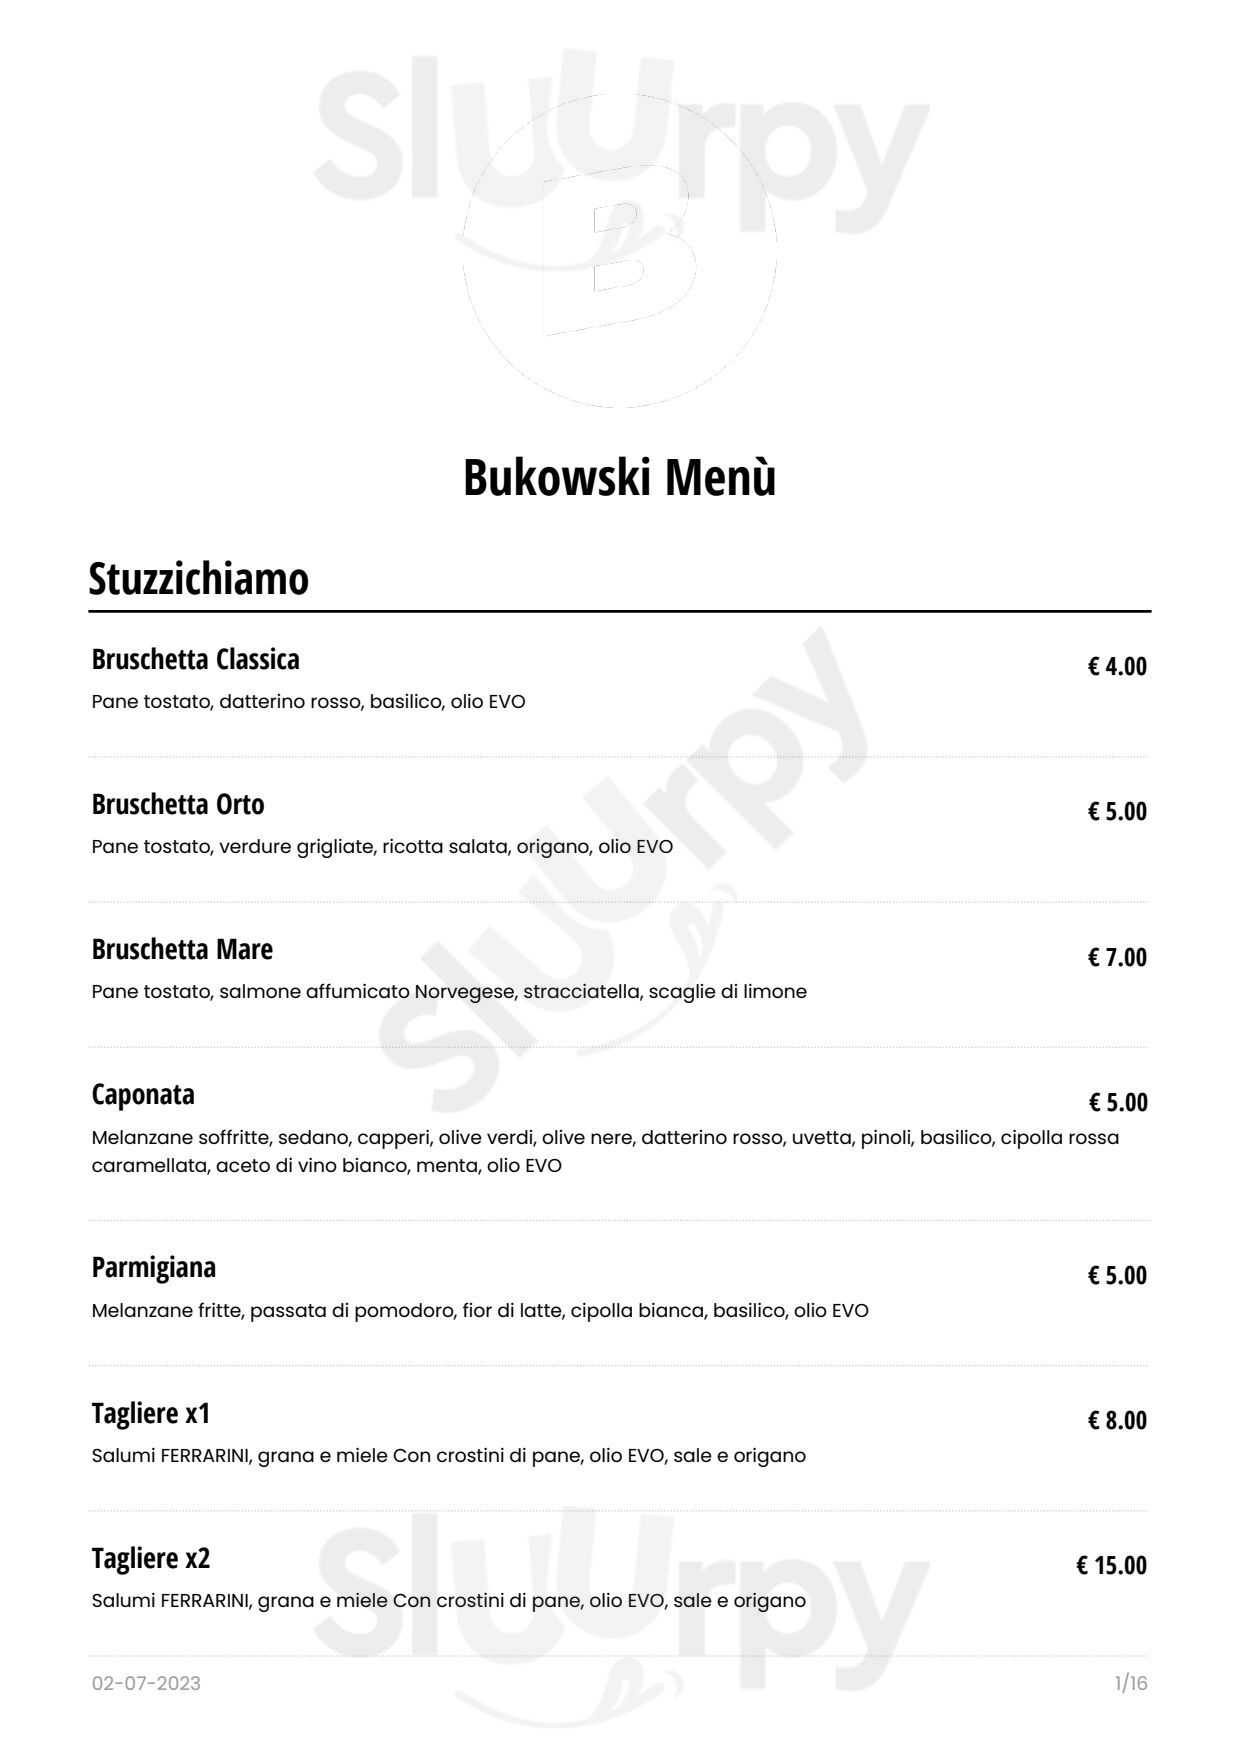 Bukowski - Birroteca Drink & Food Milazzo menù 1 pagina